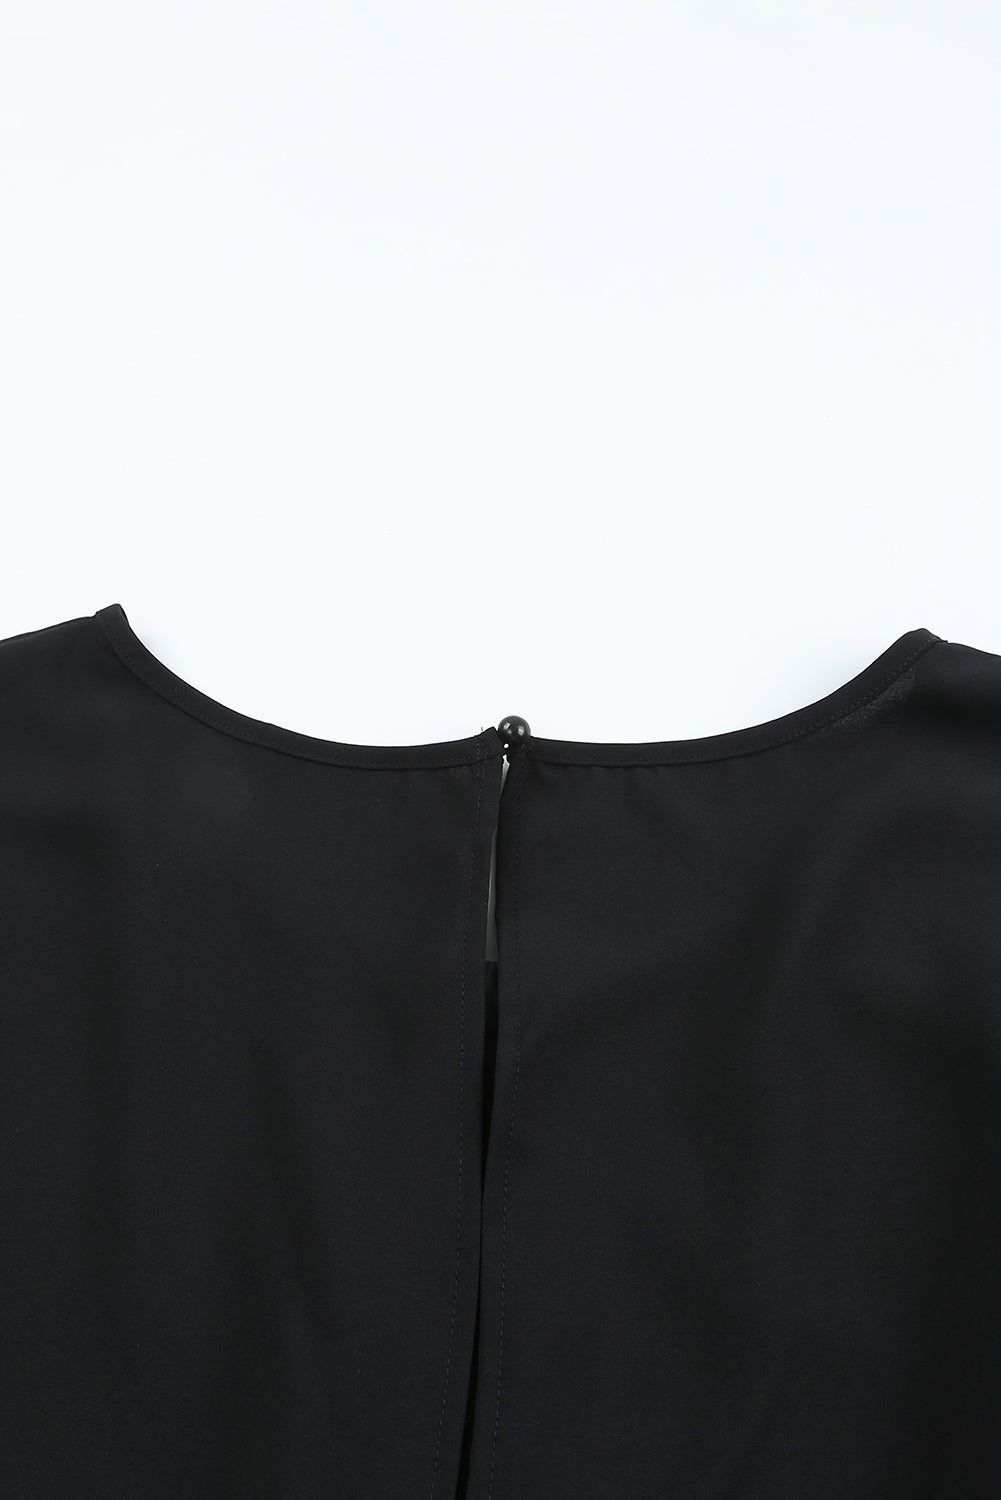 Black Zipper Front Slit Back Short Sleeve Plus Size Romper